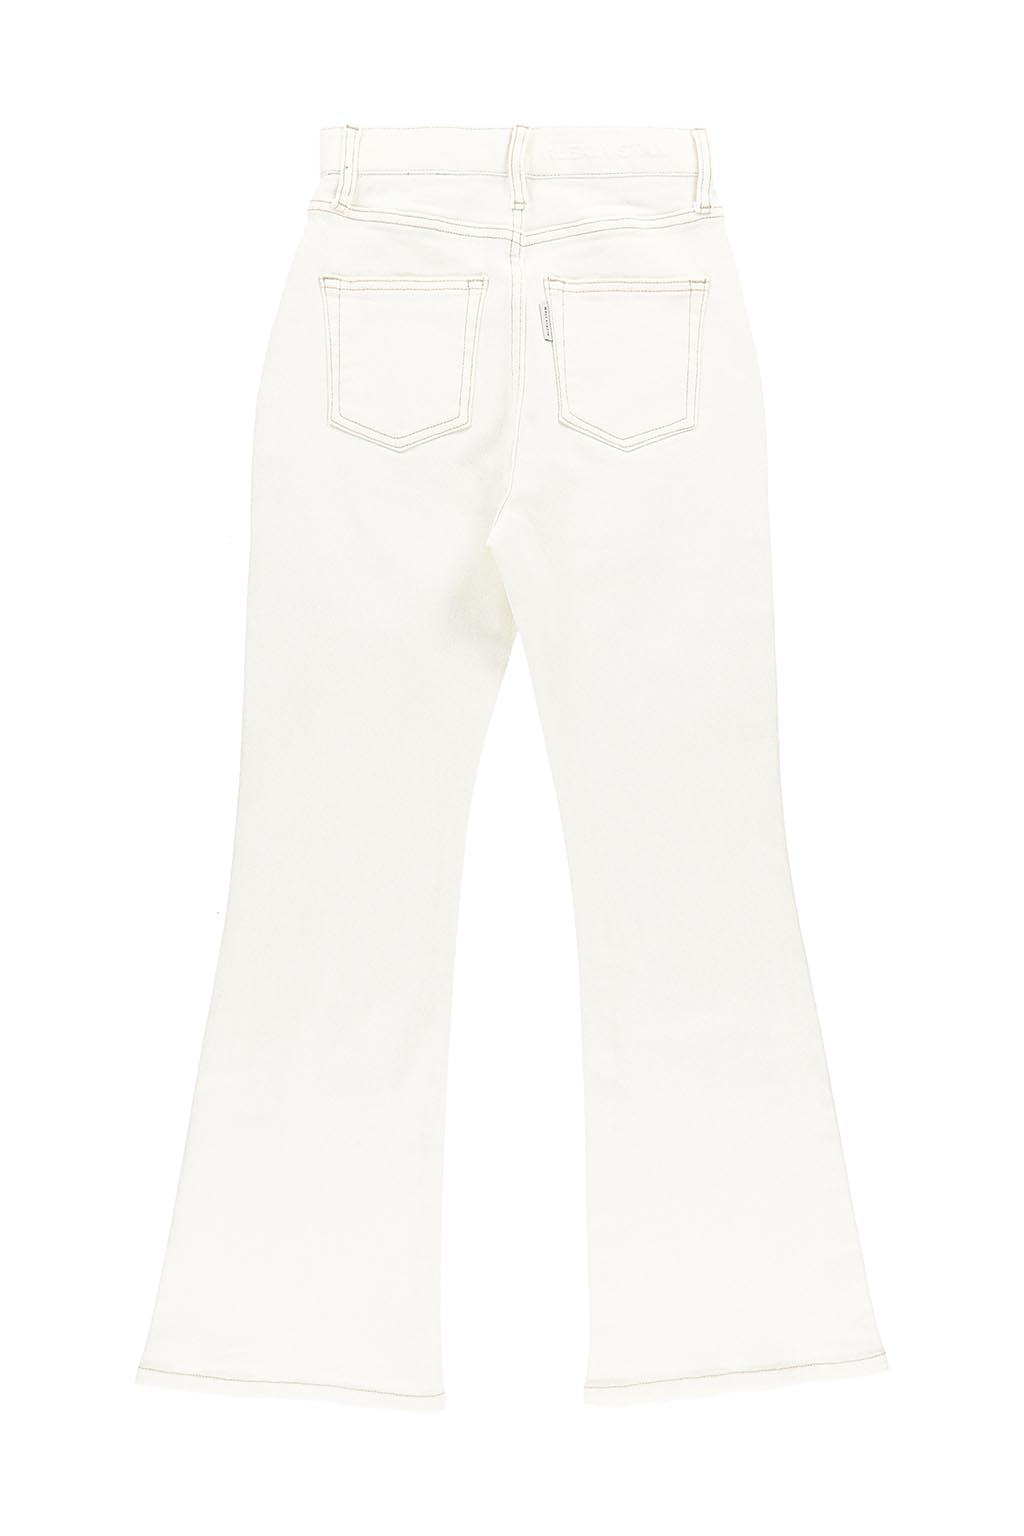 bootscut-pants-white-11